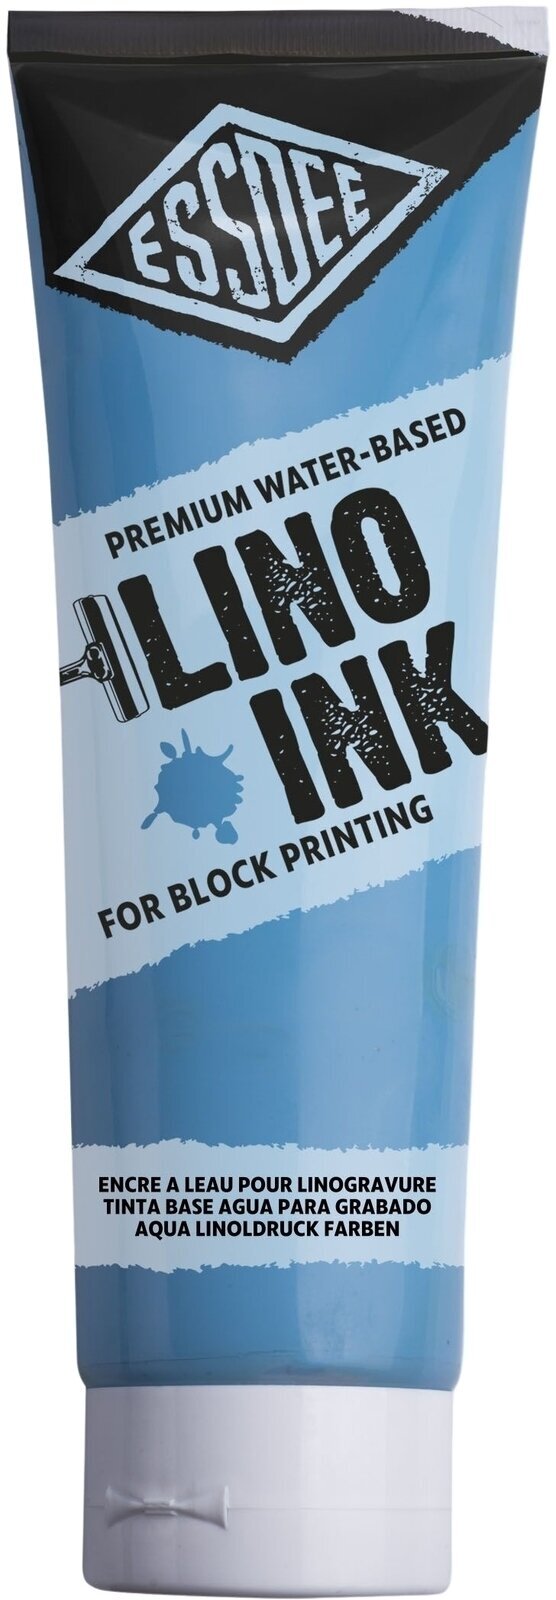 Farbe für Linolschnitt Essdee Block Printing Ink Farbe für Linolschnitt Sky Blue 300 ml